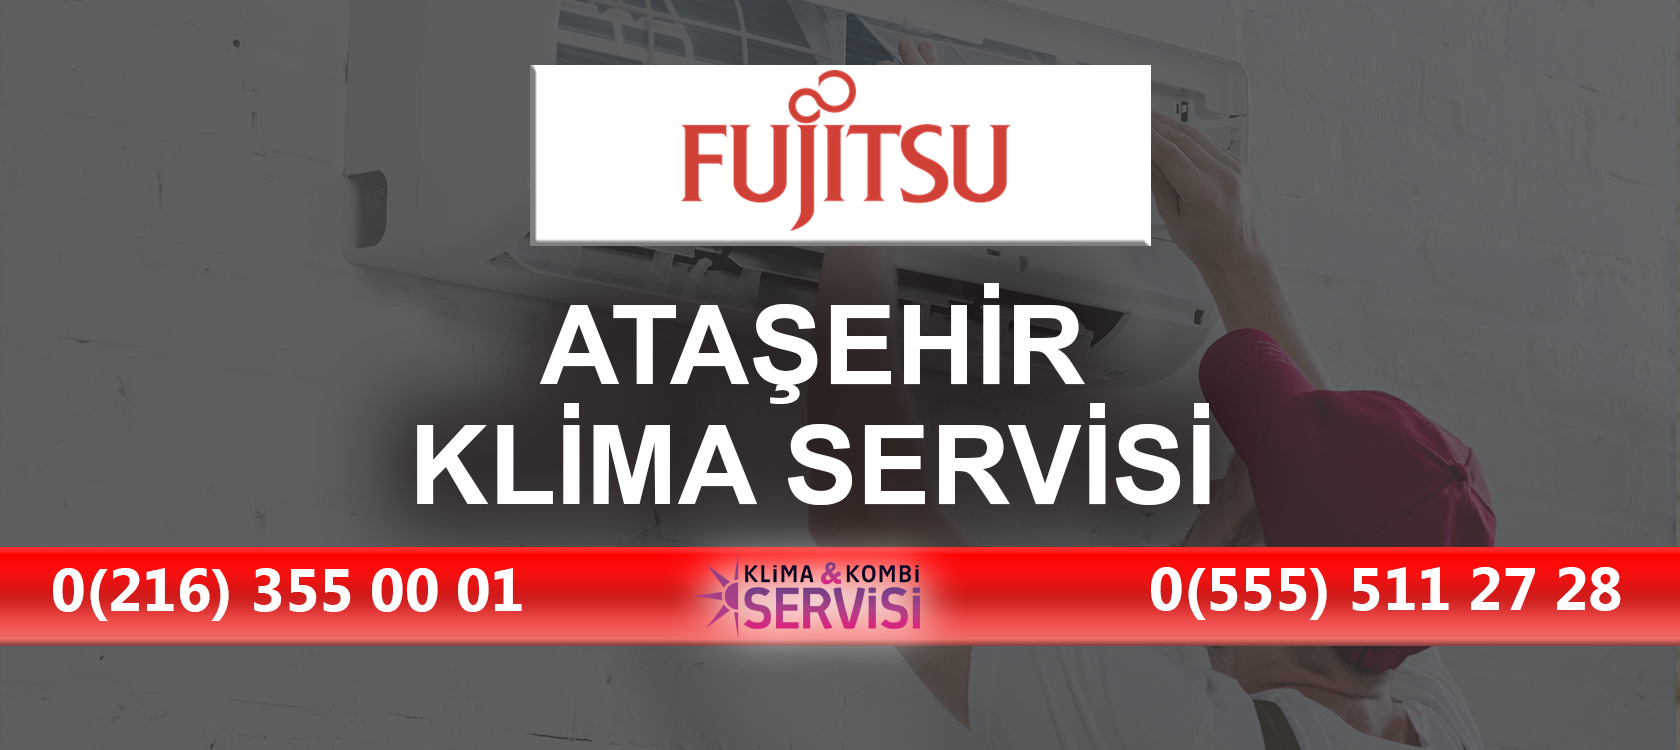 Ataşehir Fujitsu Klima Servisi